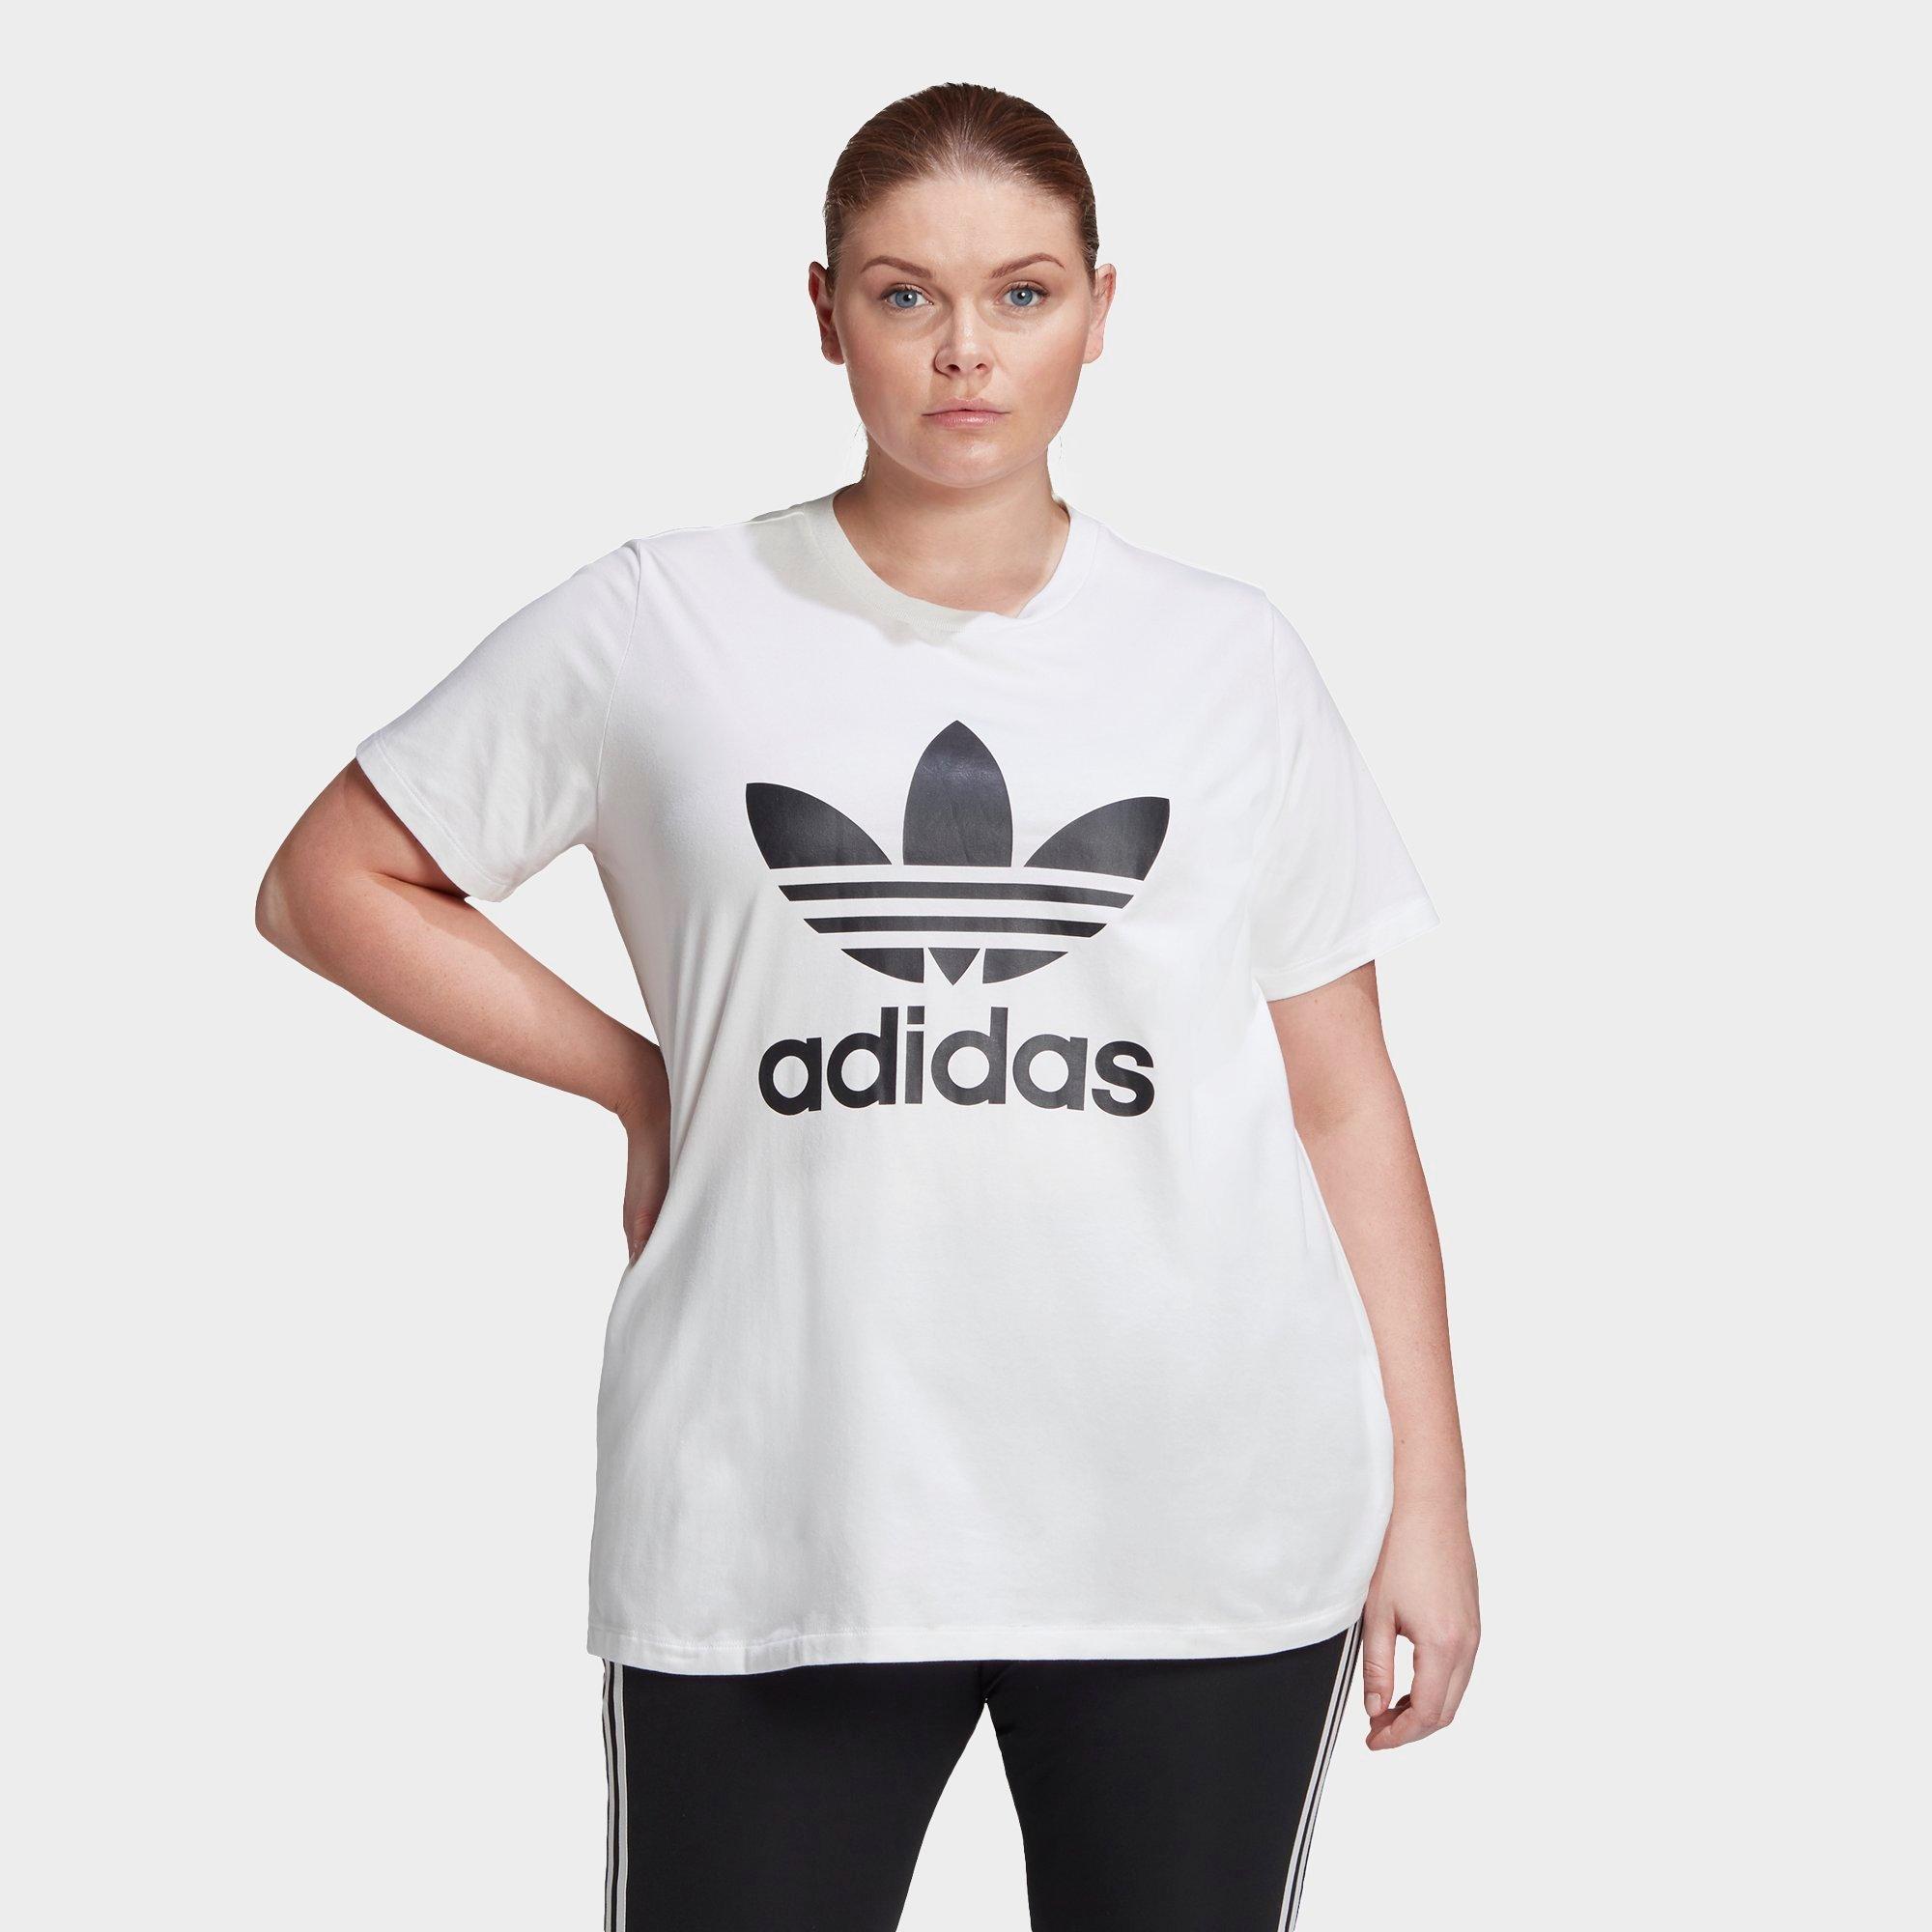 adidas female t shirt